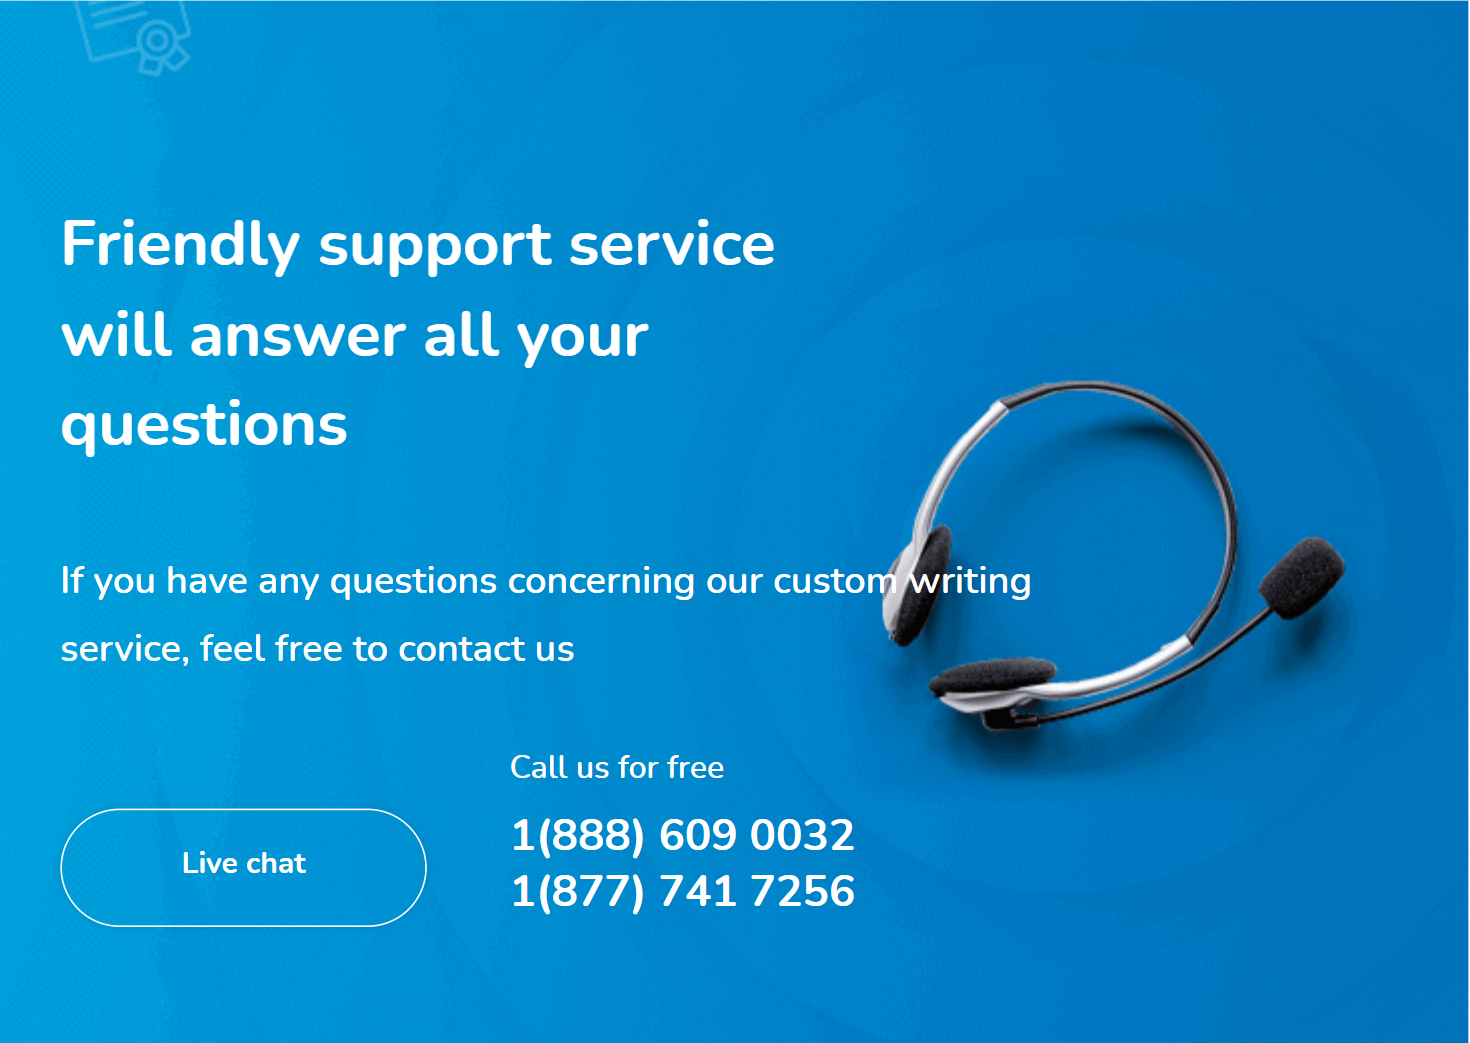 essaysbank.com Customer Support